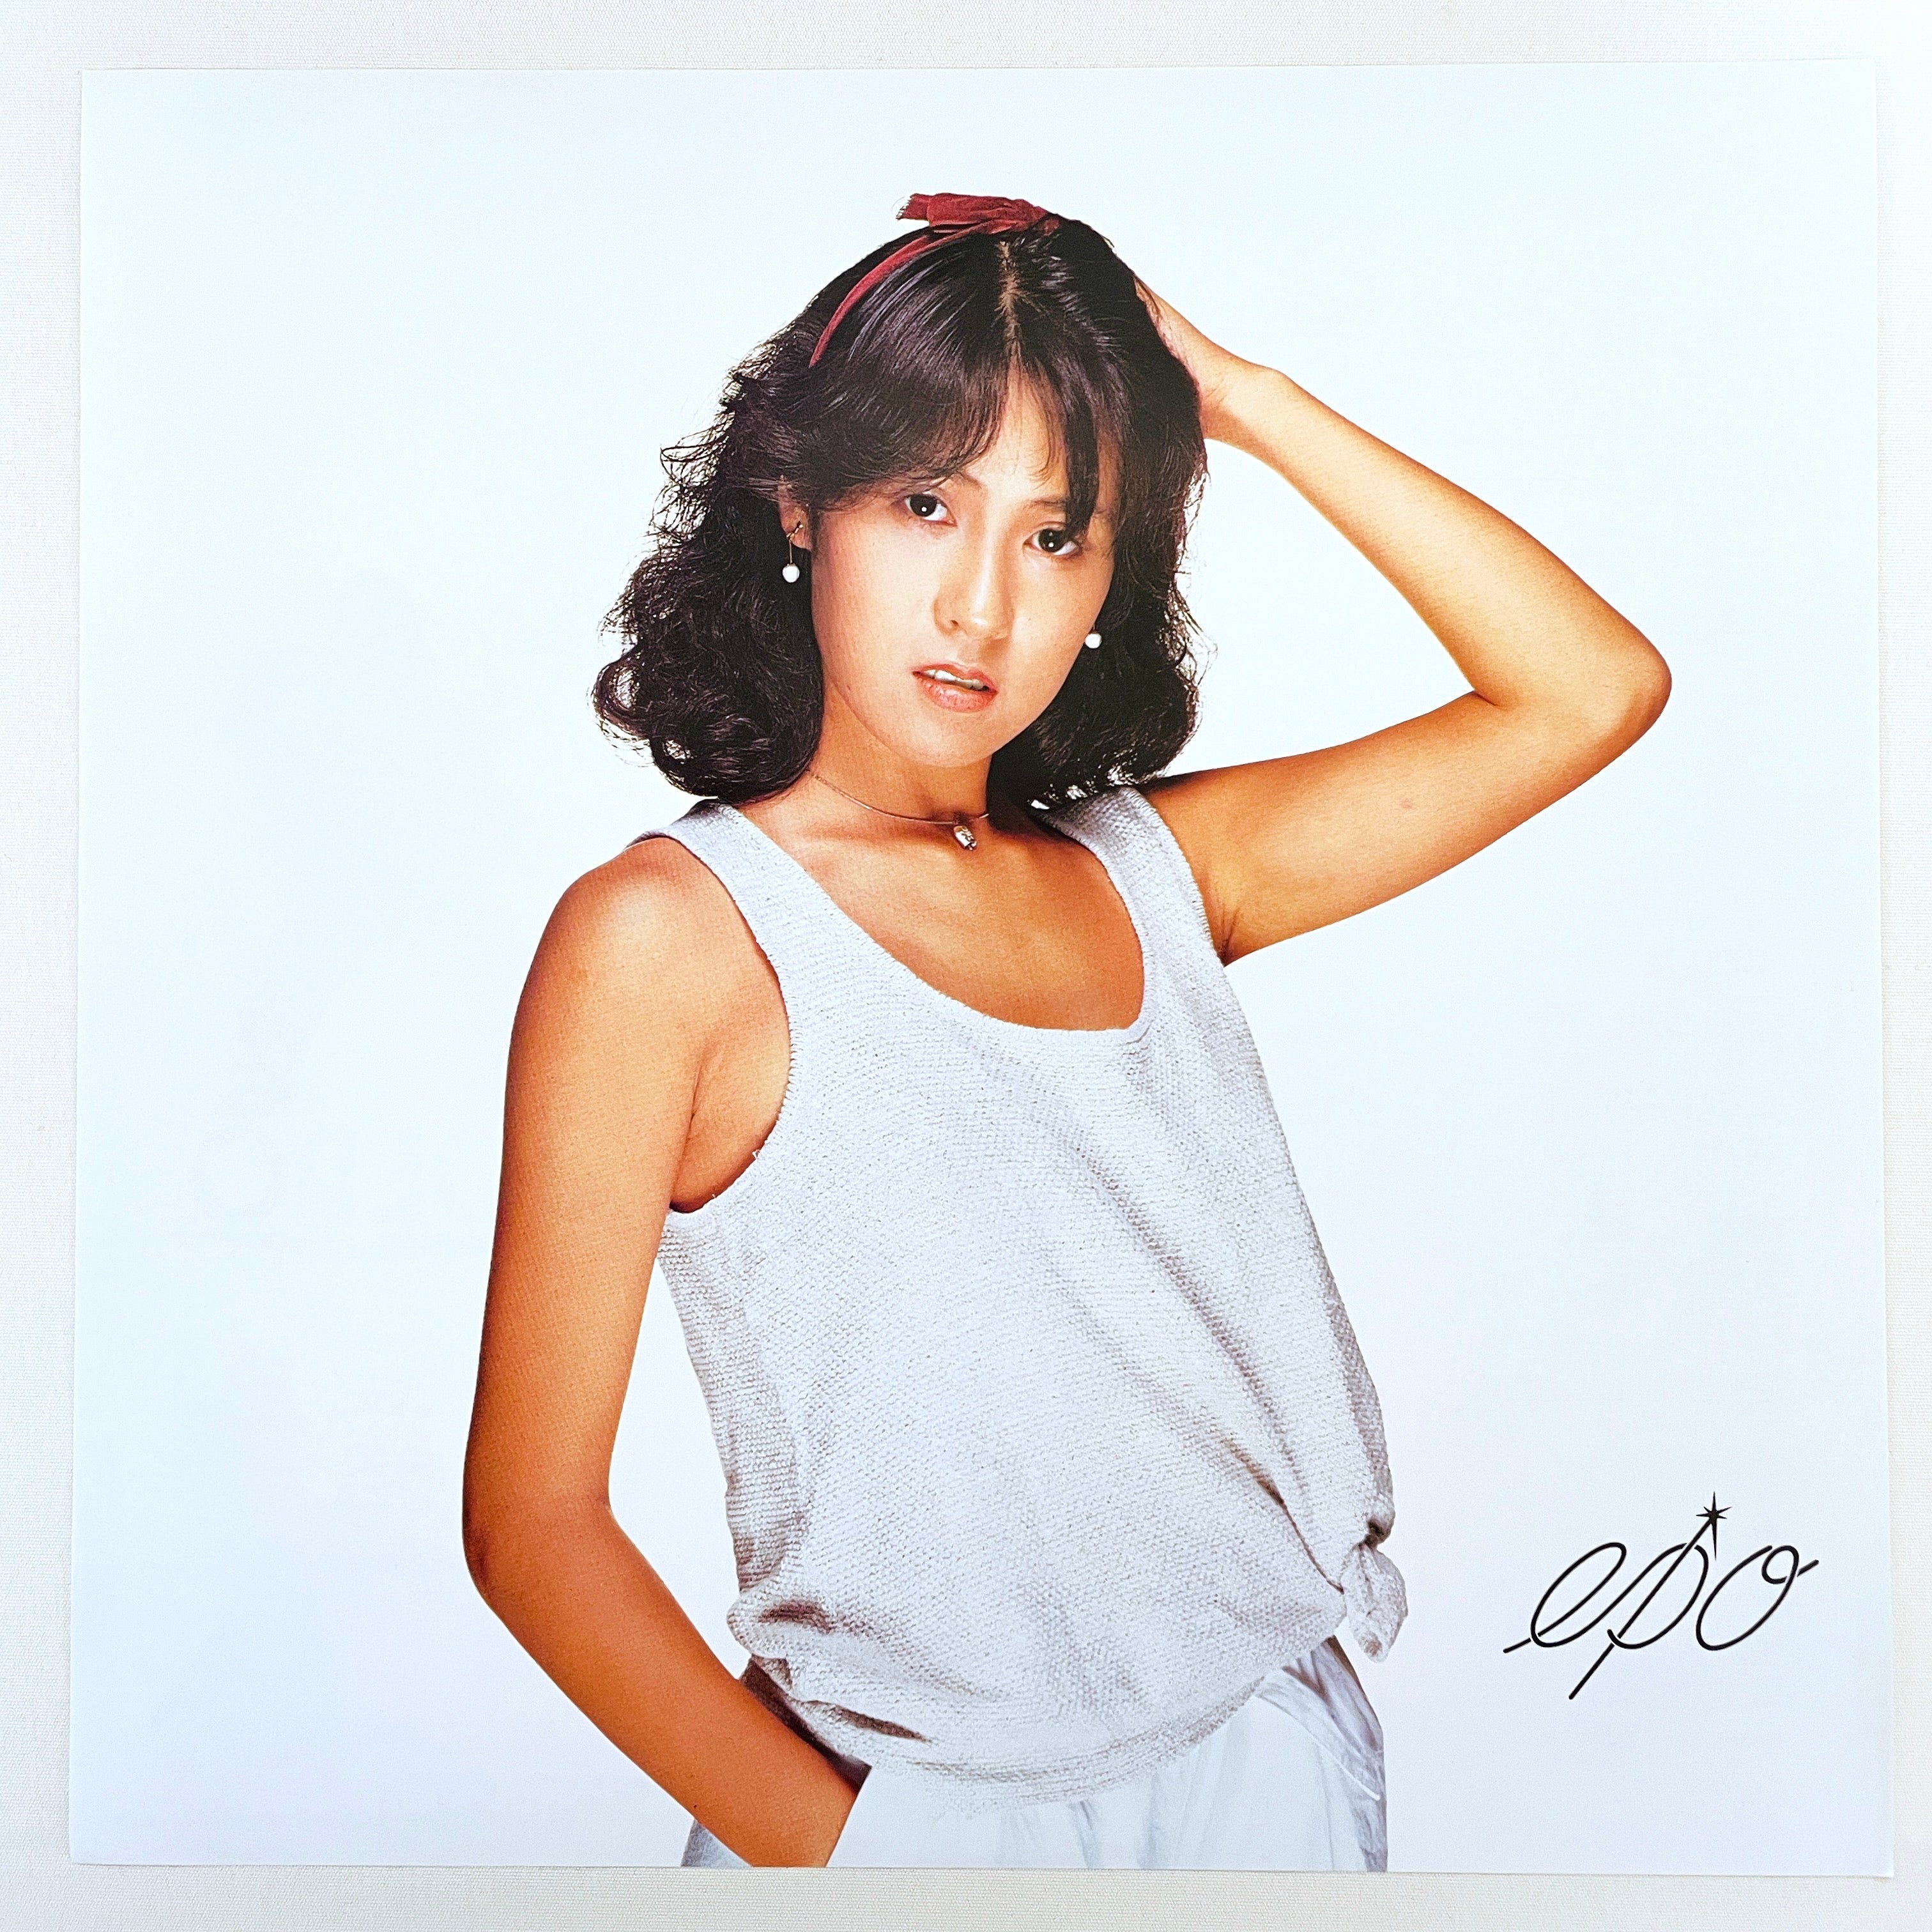 Epo Joepo~1981Khz RCA RHL-4501 Tatsuro Yamashita City Pop – Portal